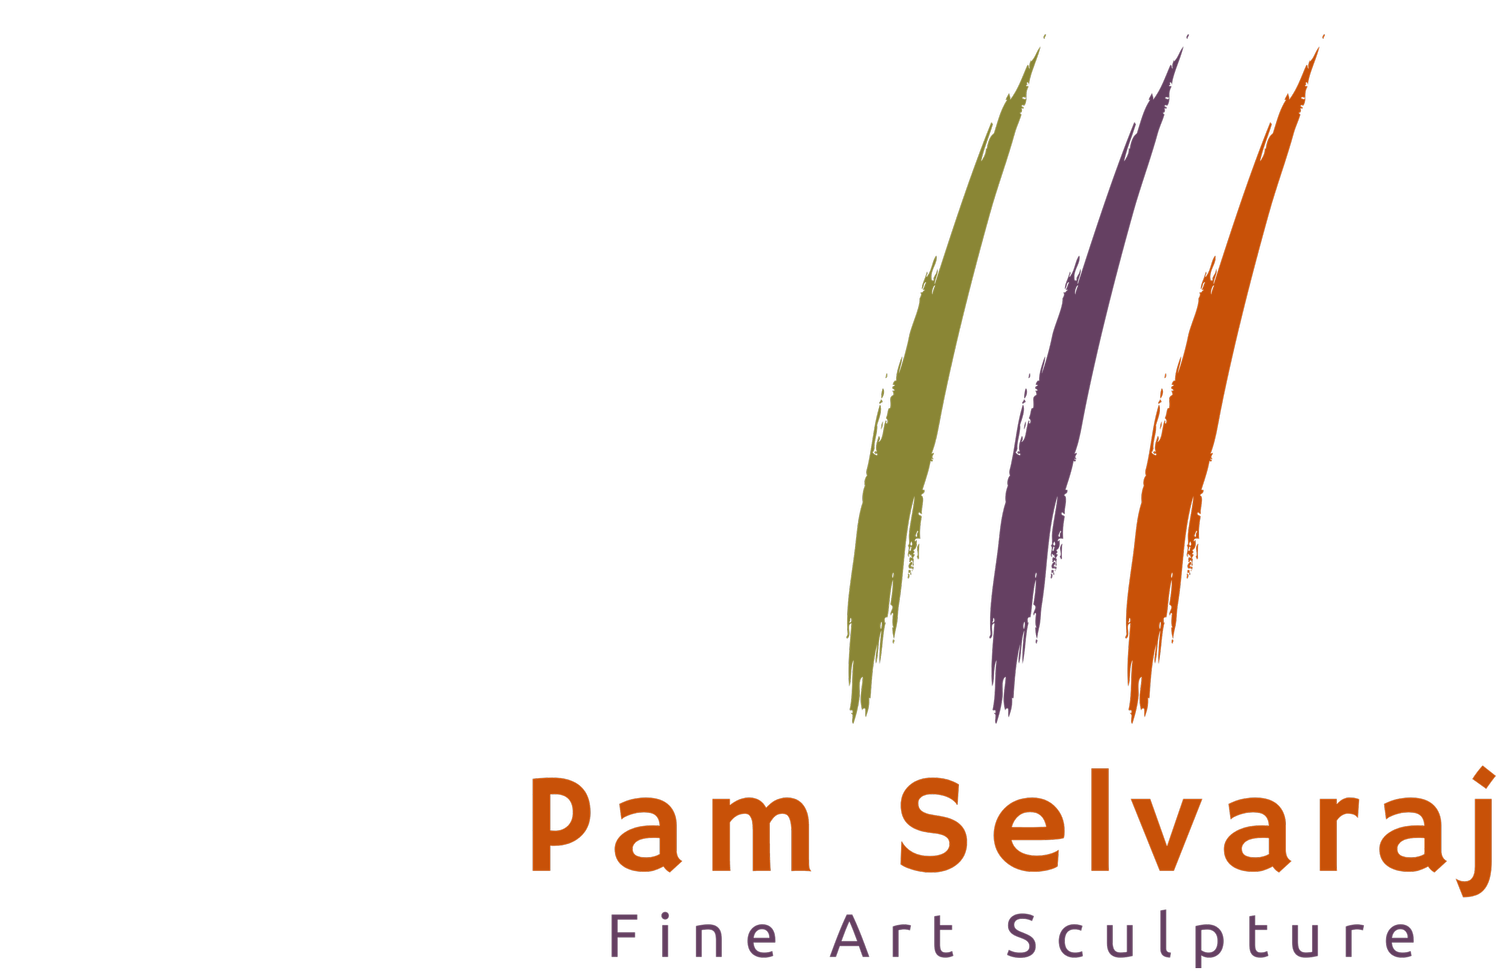 Pam Selvaraj Sculpture